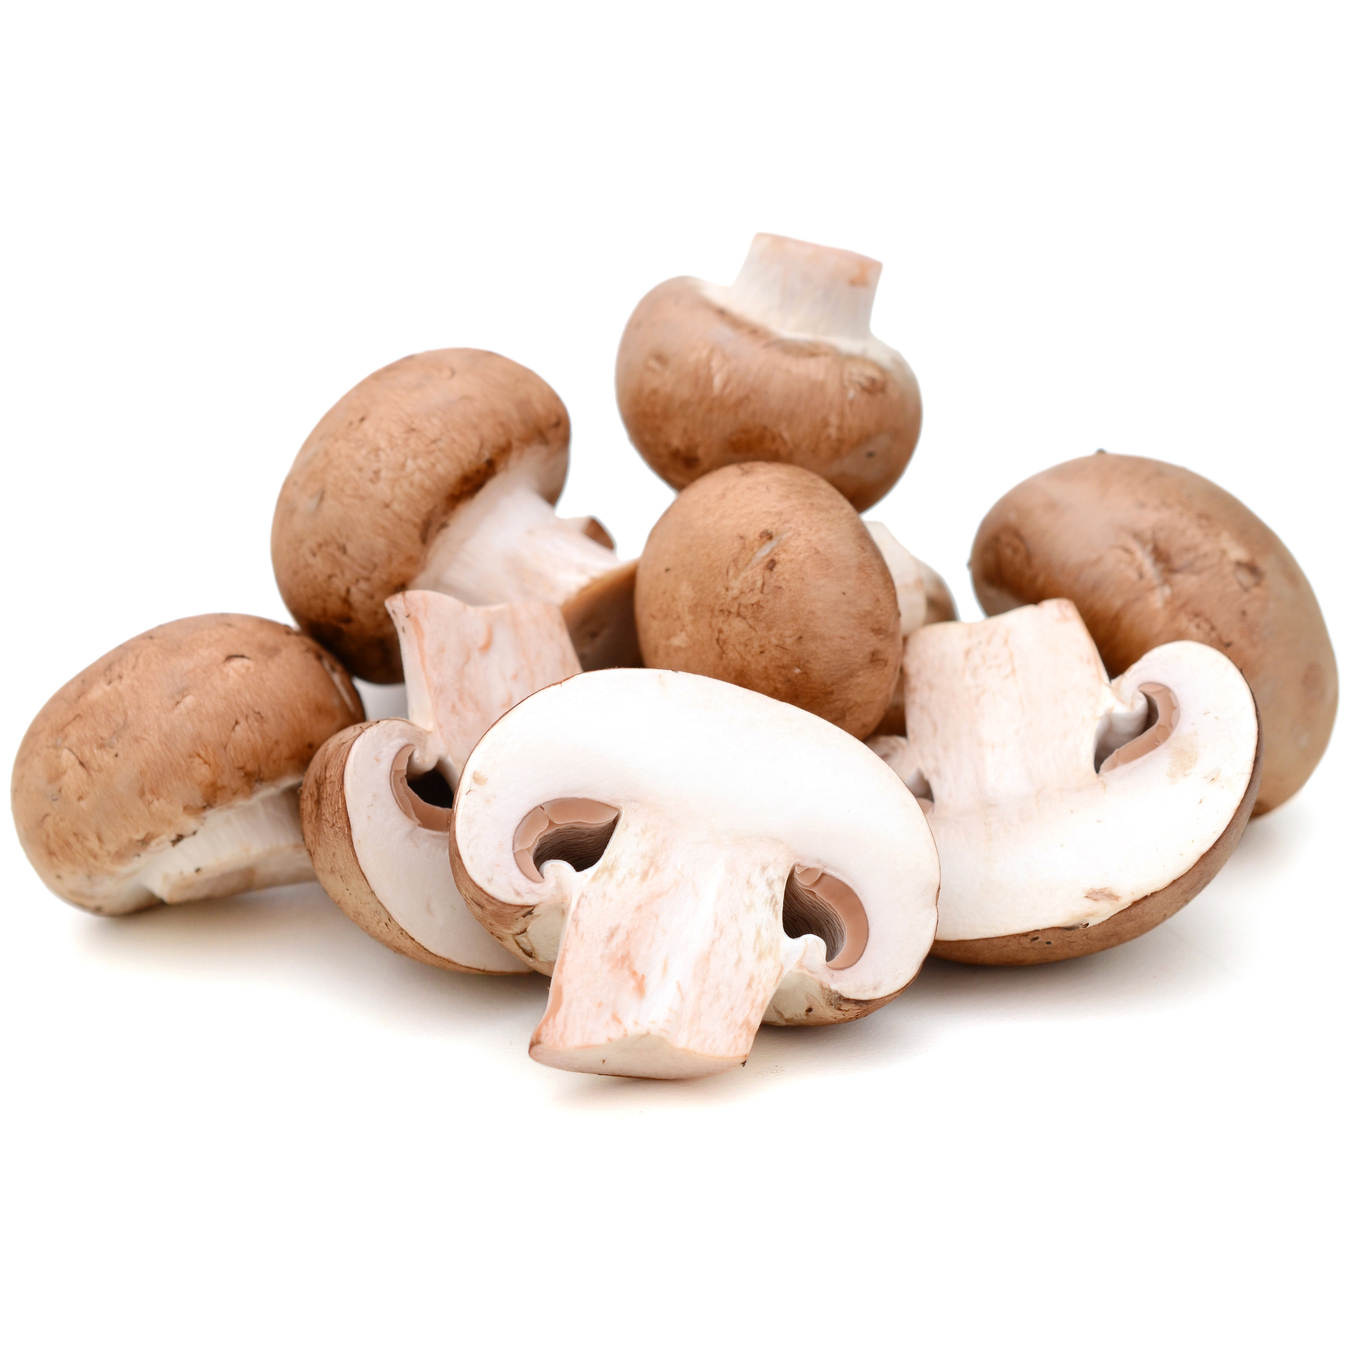 Royal Champignons mushrooms